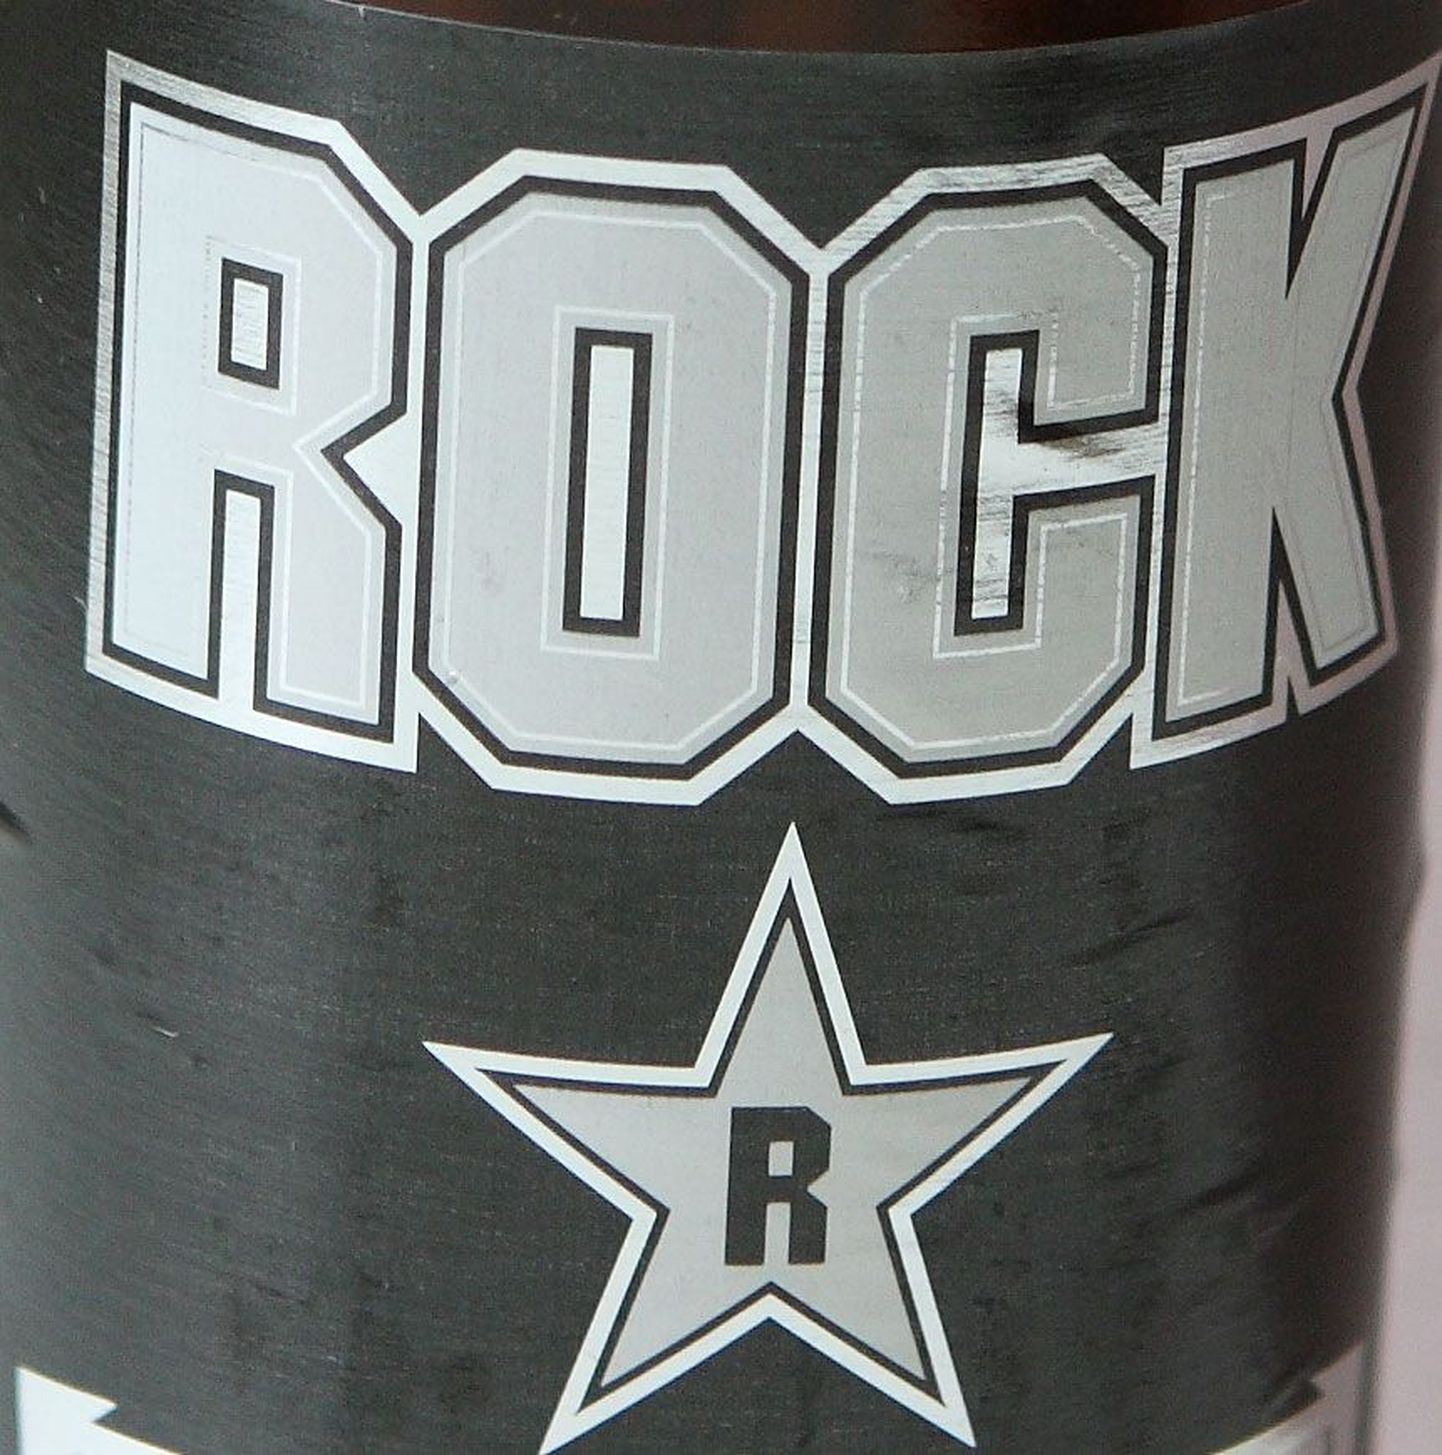 Rock õlu.